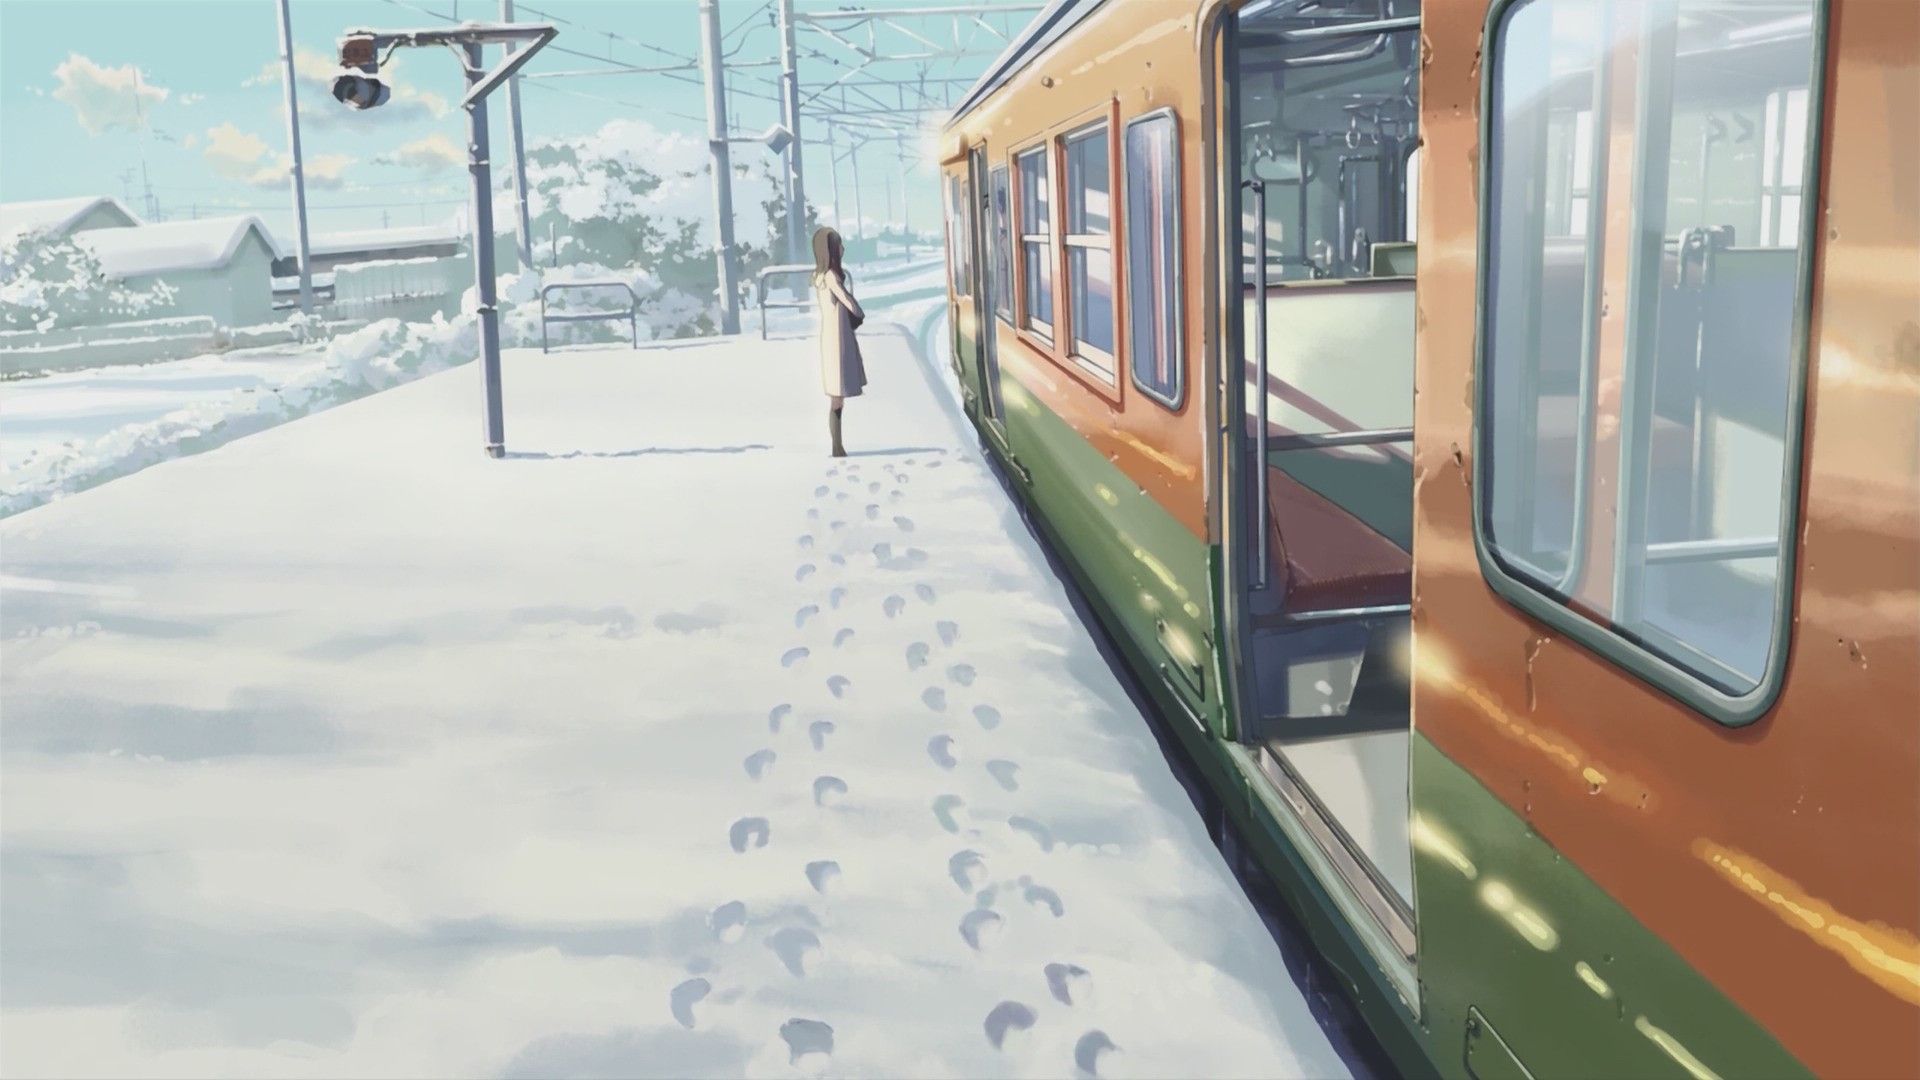 1920x1080 winter women train train station anime 5 centimeters per second footprints snow makoto shinkai wallpaper JPG 250 kB HD Wallpaper